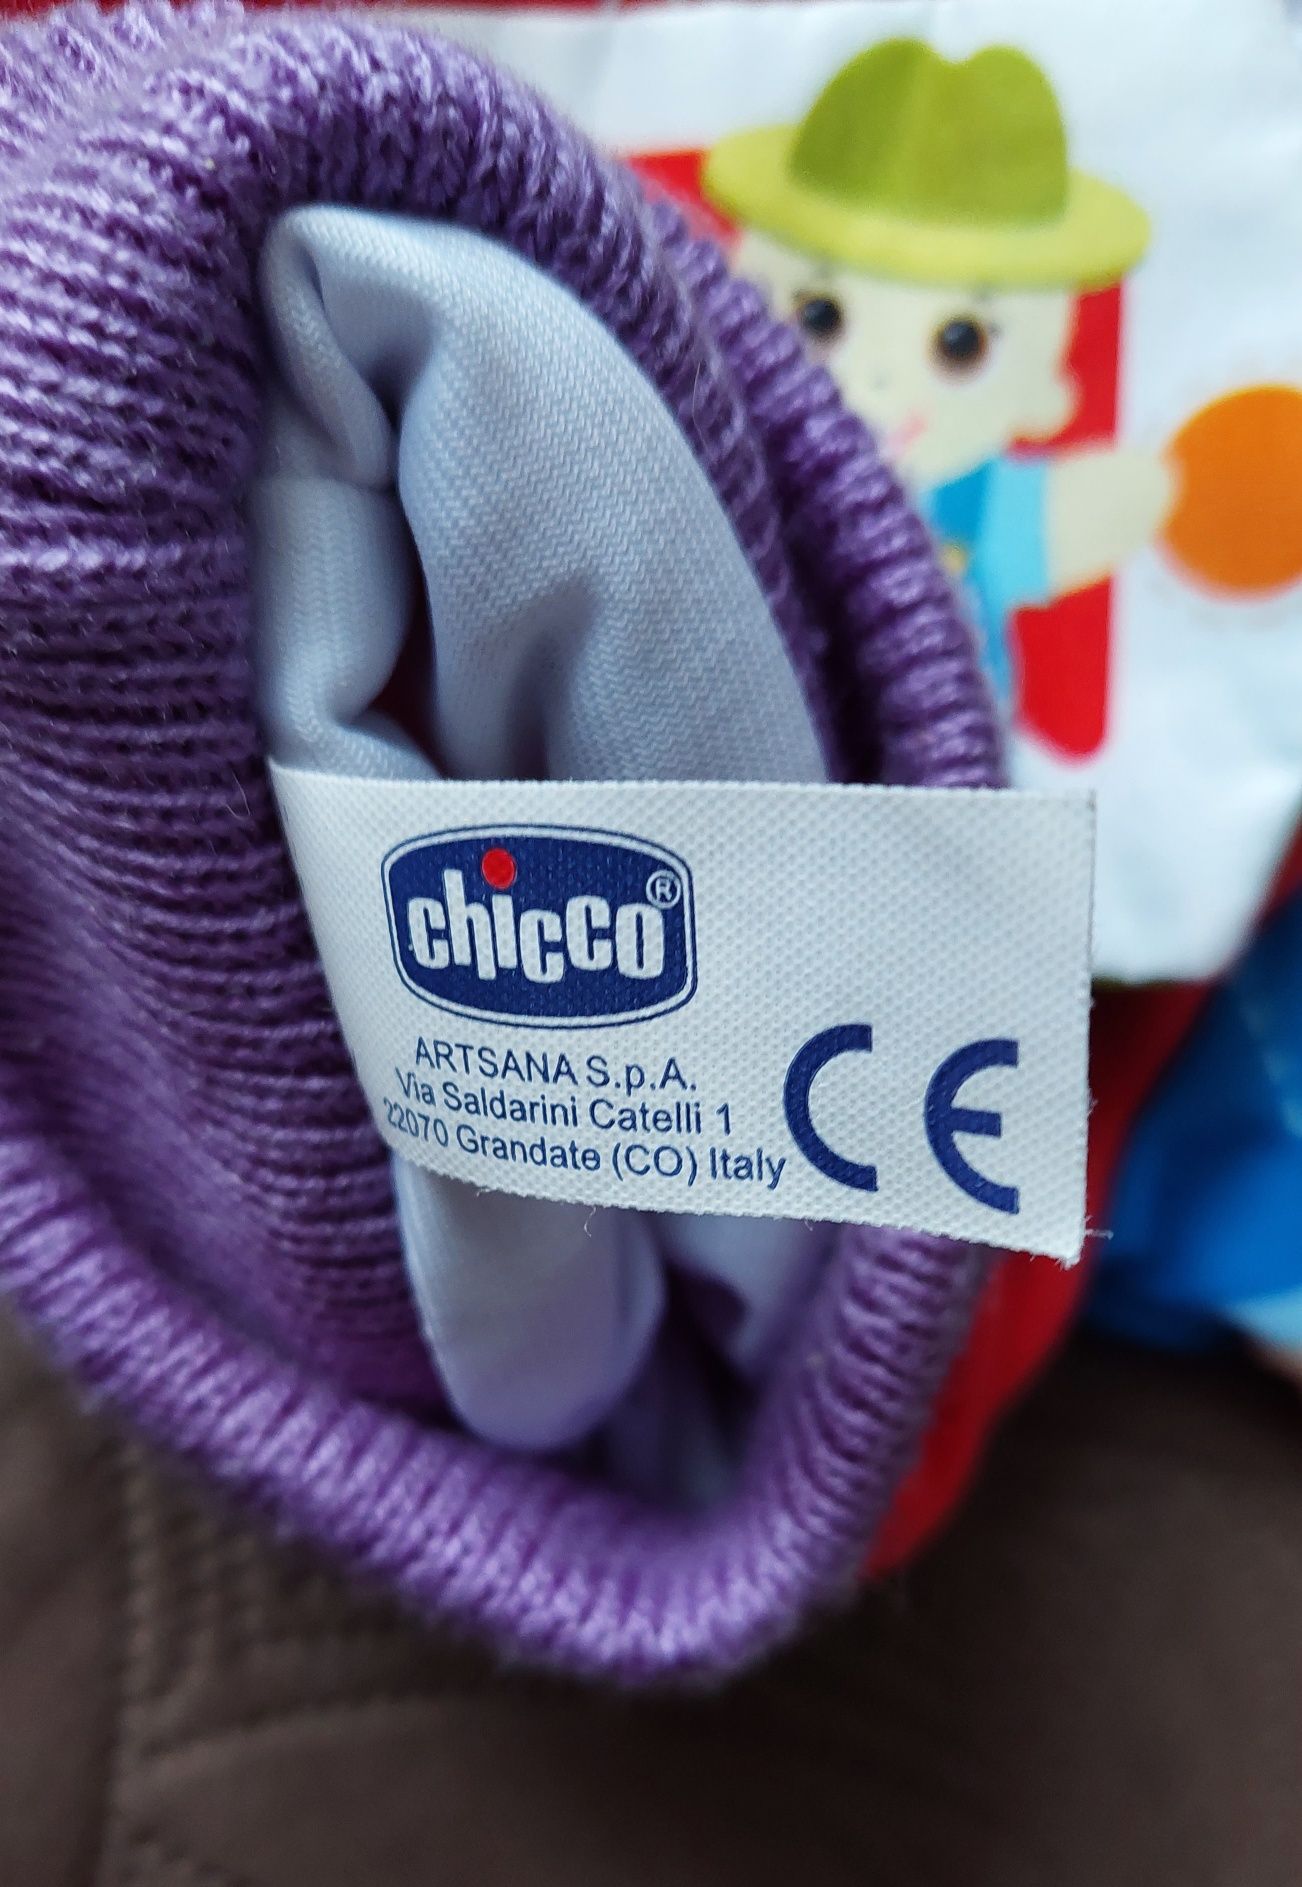 Chicco розвиваюча іграшкова рукавичка